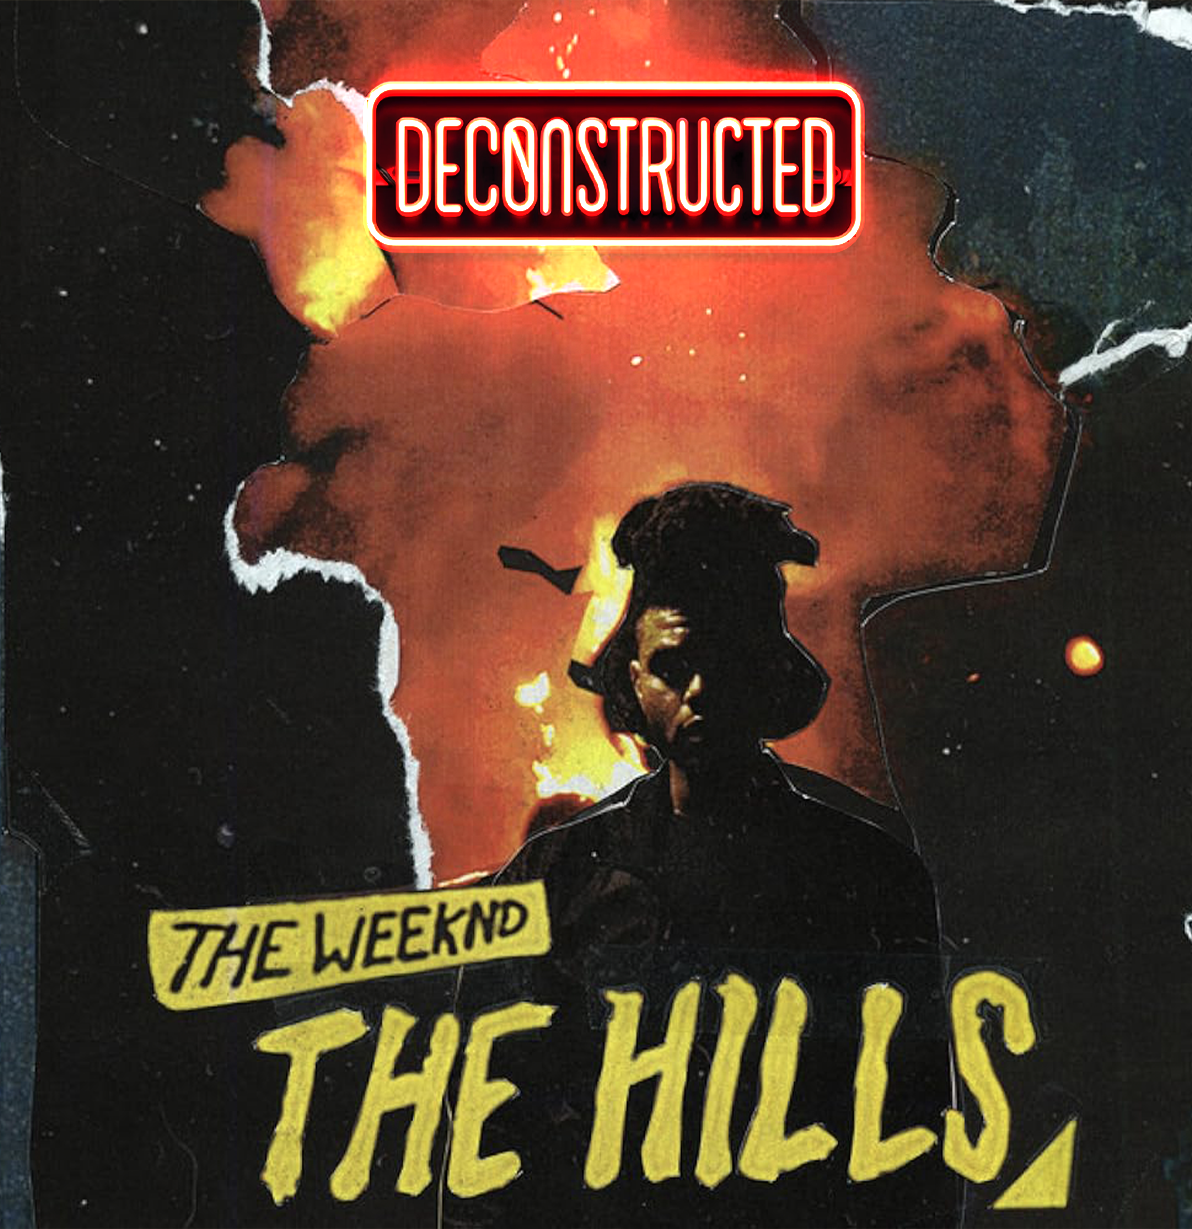 DECONSTRUCTED: 'The Weeknd - The Hills' (FLP & STEMS)